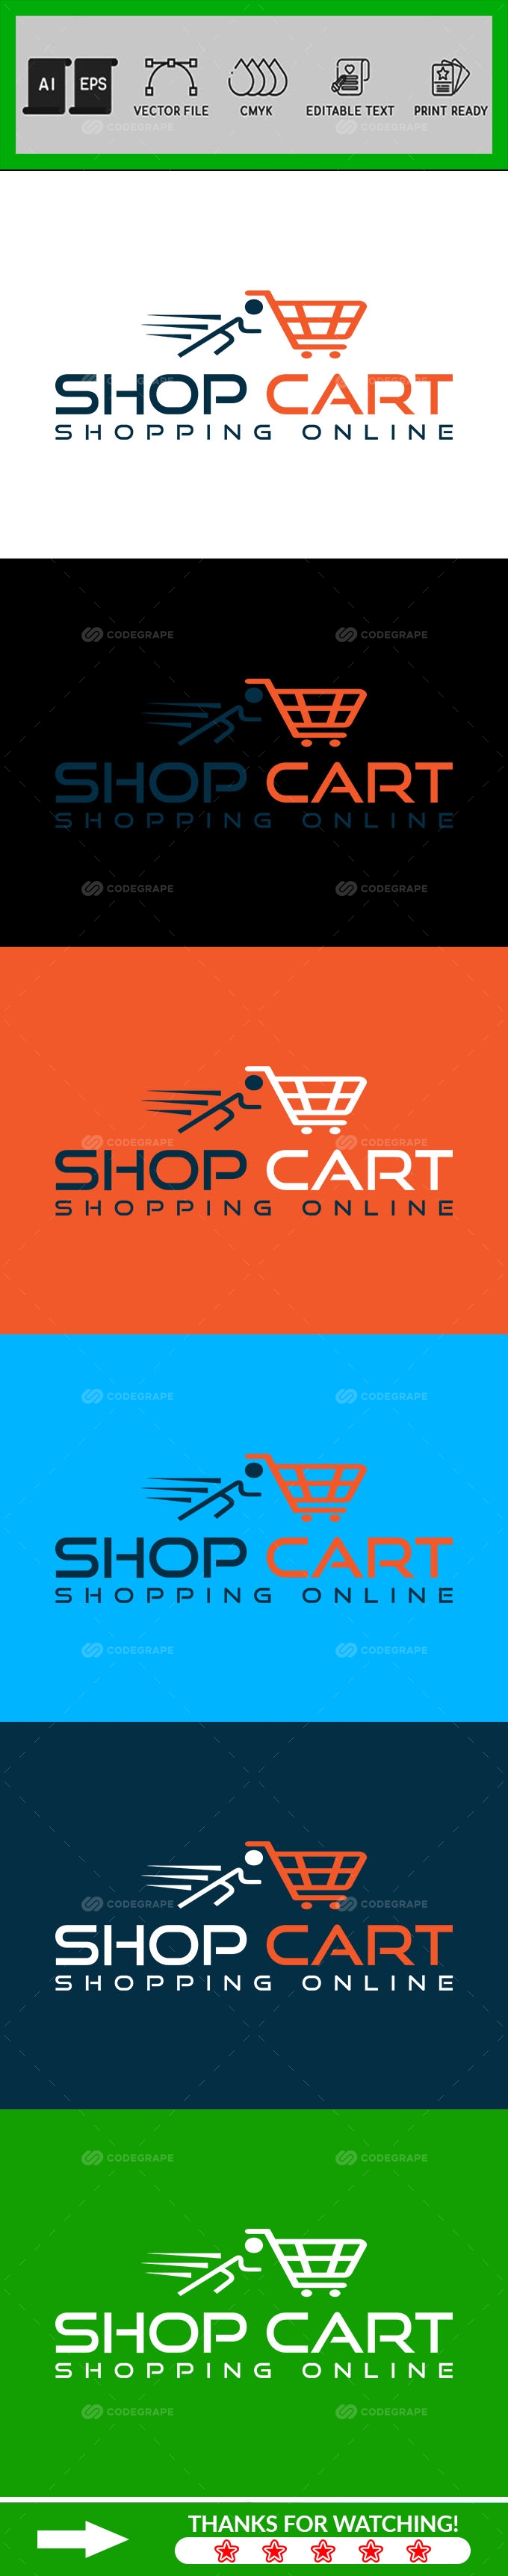 Online Shopping Store Logo Design Template